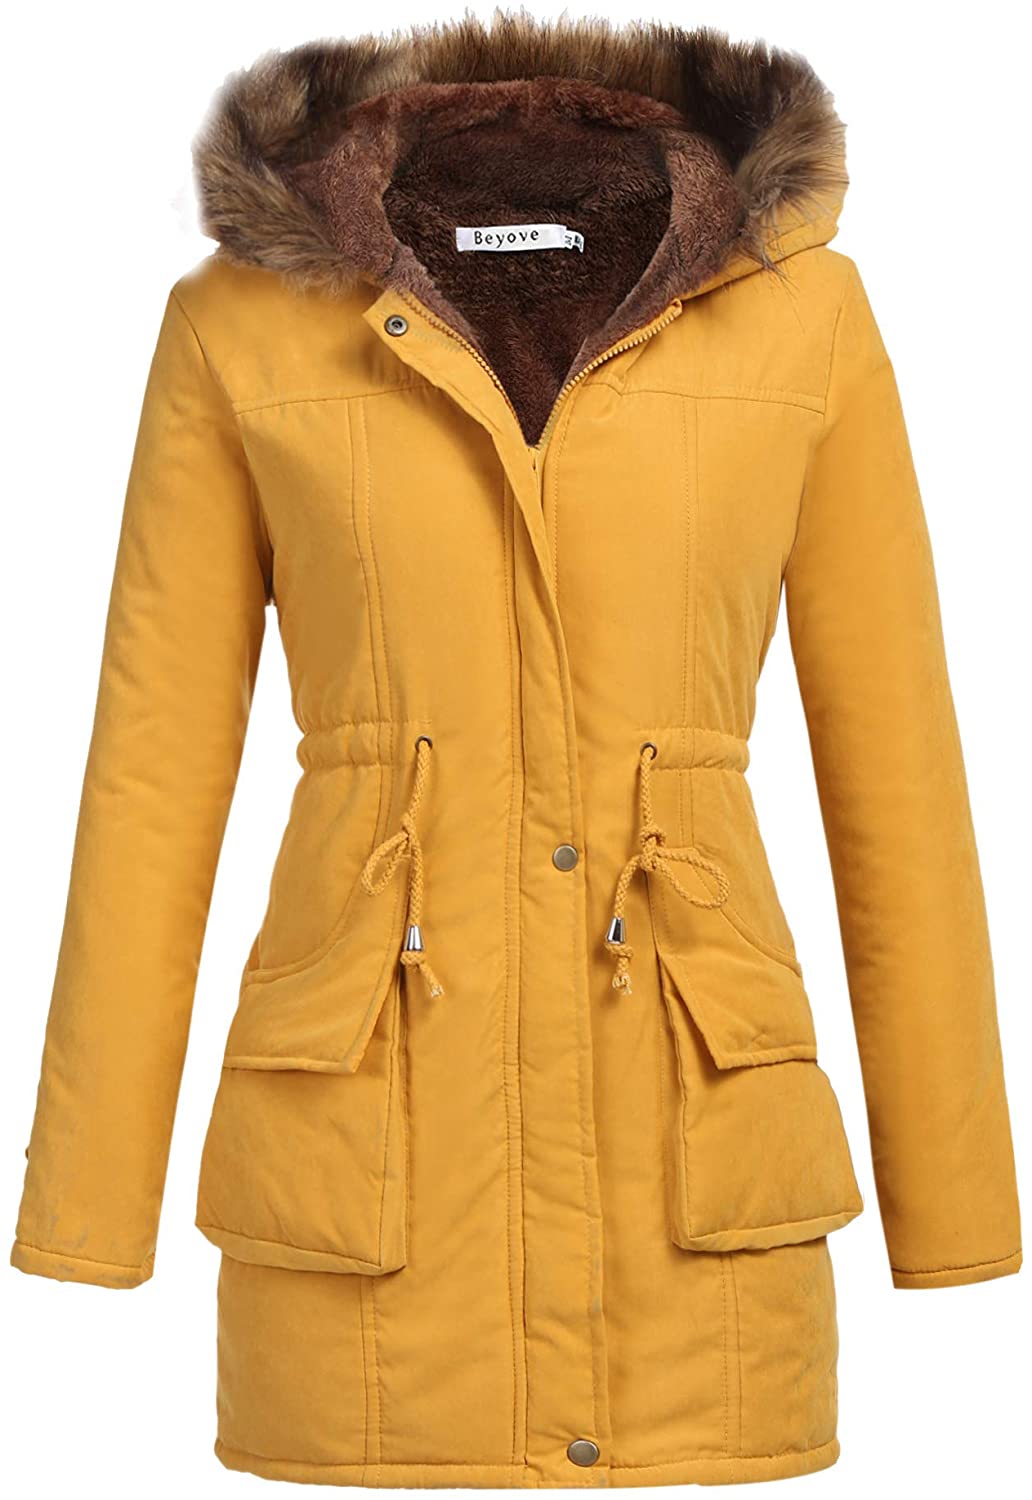 Beyove Womens Winter Coats Hooded Warm Winter Parka with Faux Fur Jackets 